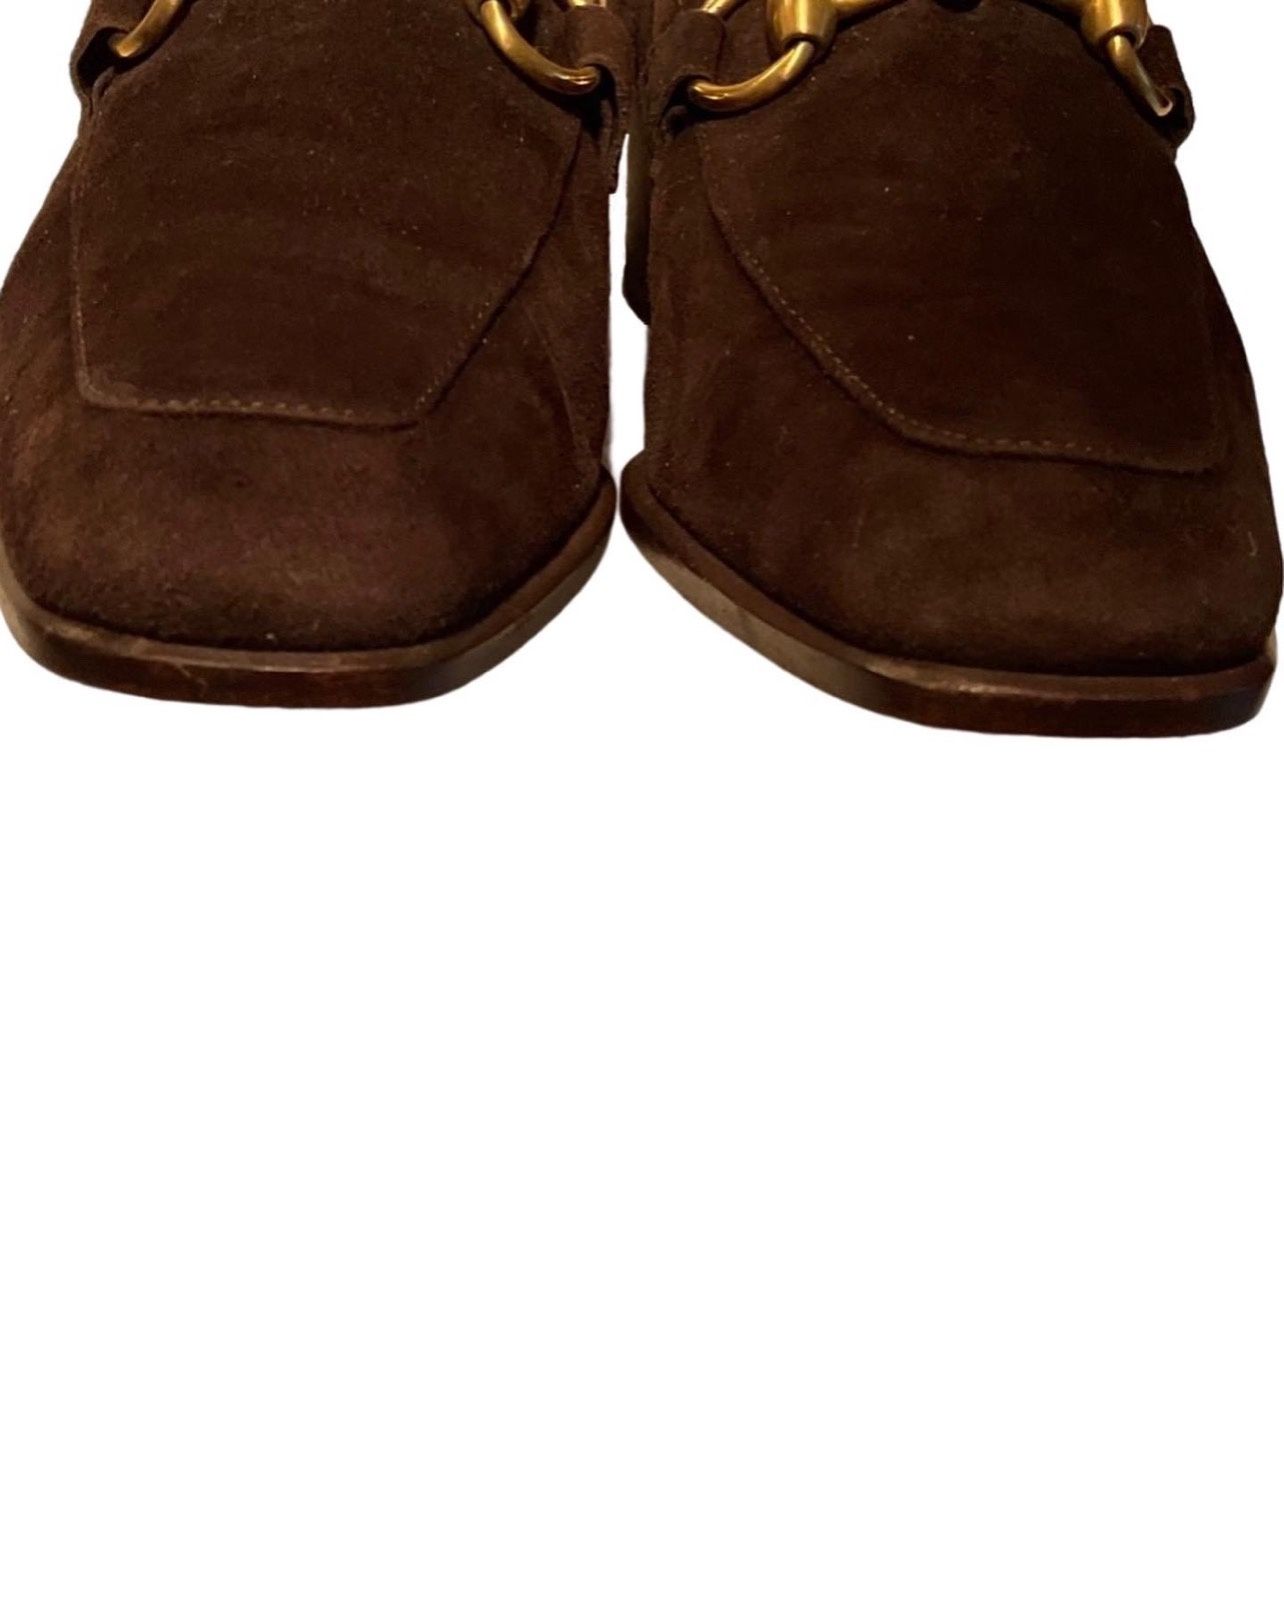 Loafers Gucci Horsebit, 36, originali, maro, made in Italy